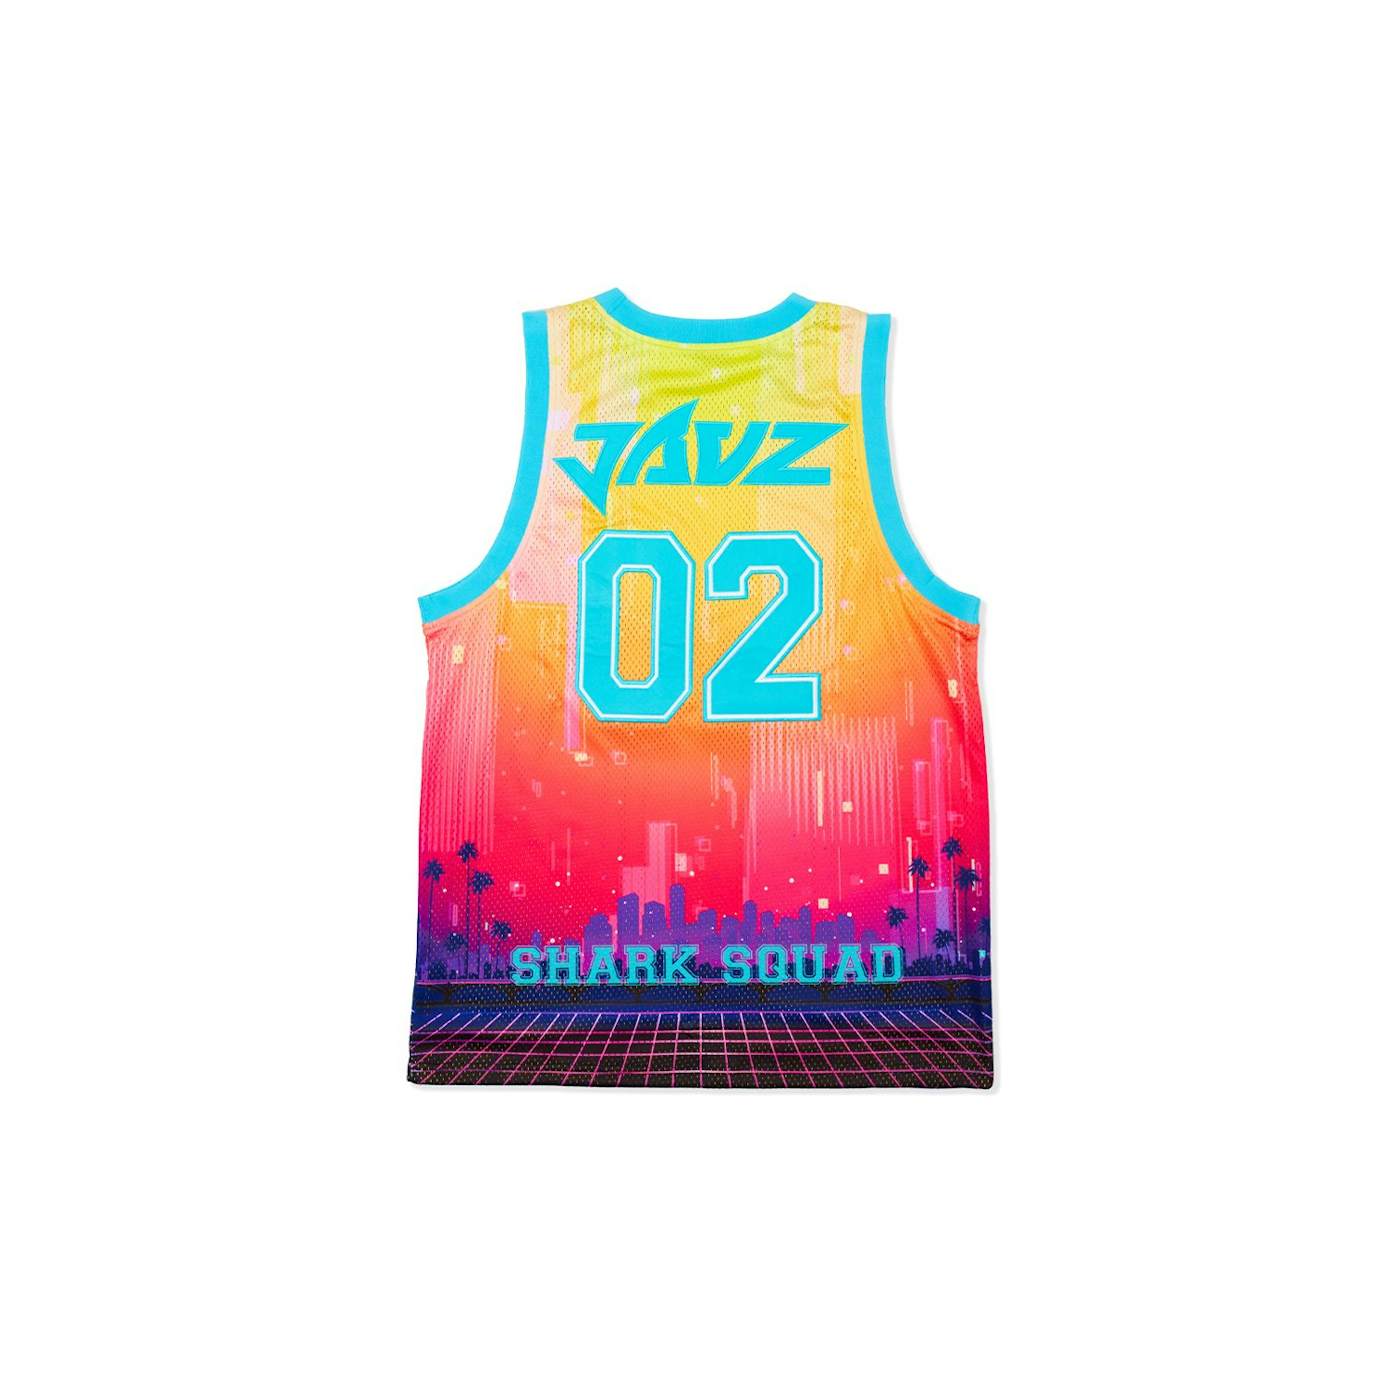 Jauz Squad Basketball Jersey